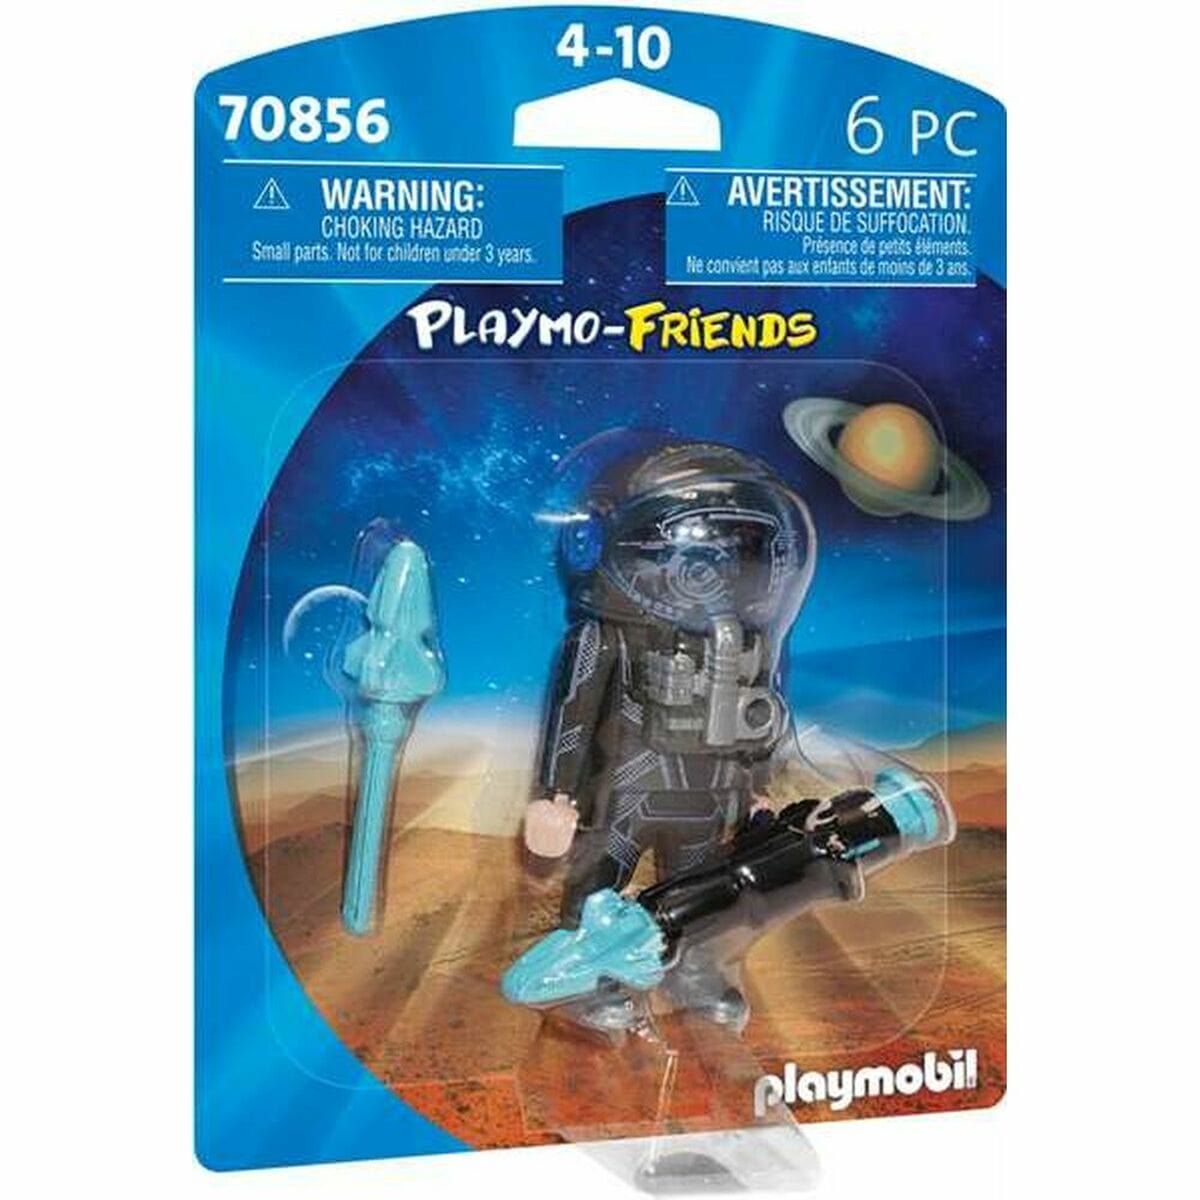 Playmobil Spielzeug | Kostüme > Spielzeug und Spiele > Action-Figuren Figur Playmobil Playmo-Friends Weltraum Soldat 70856 (6 pcs)